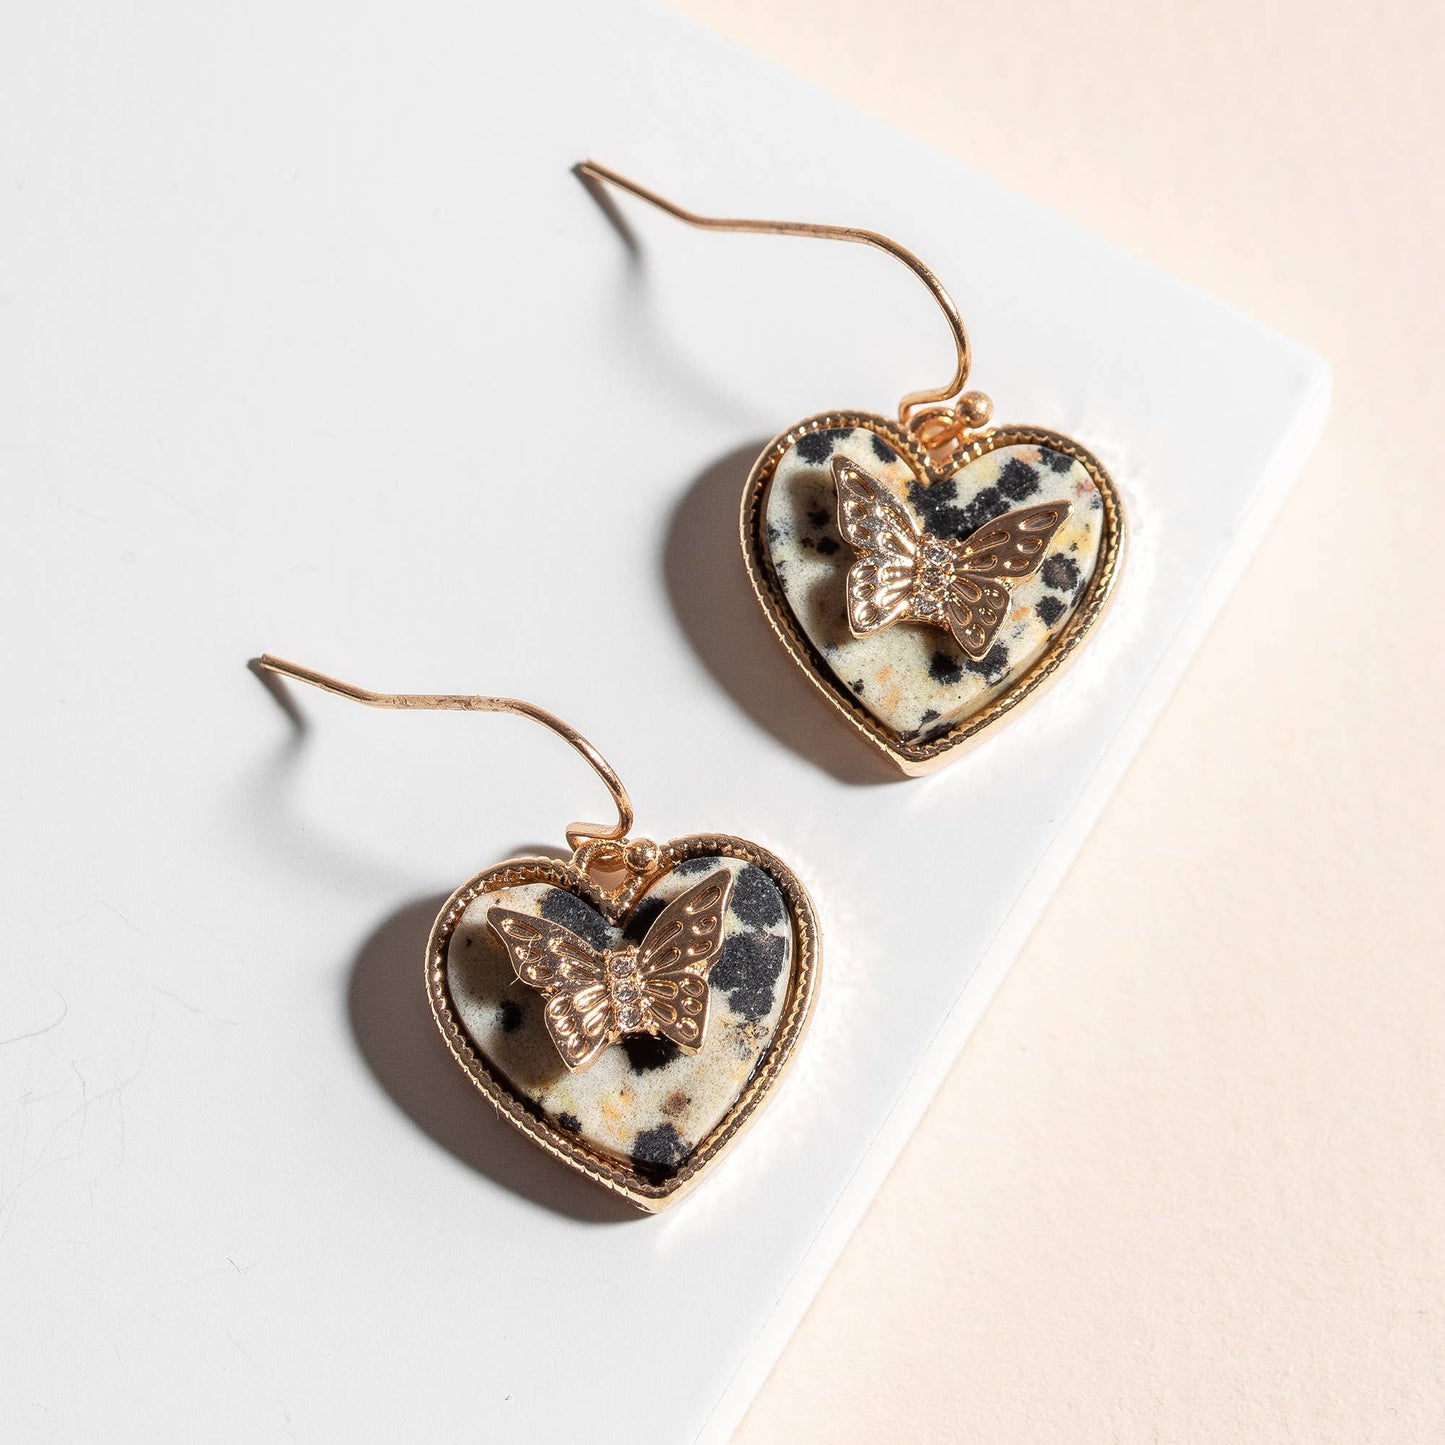 Stone Heart and Butterfly Earrings, Dalmatian